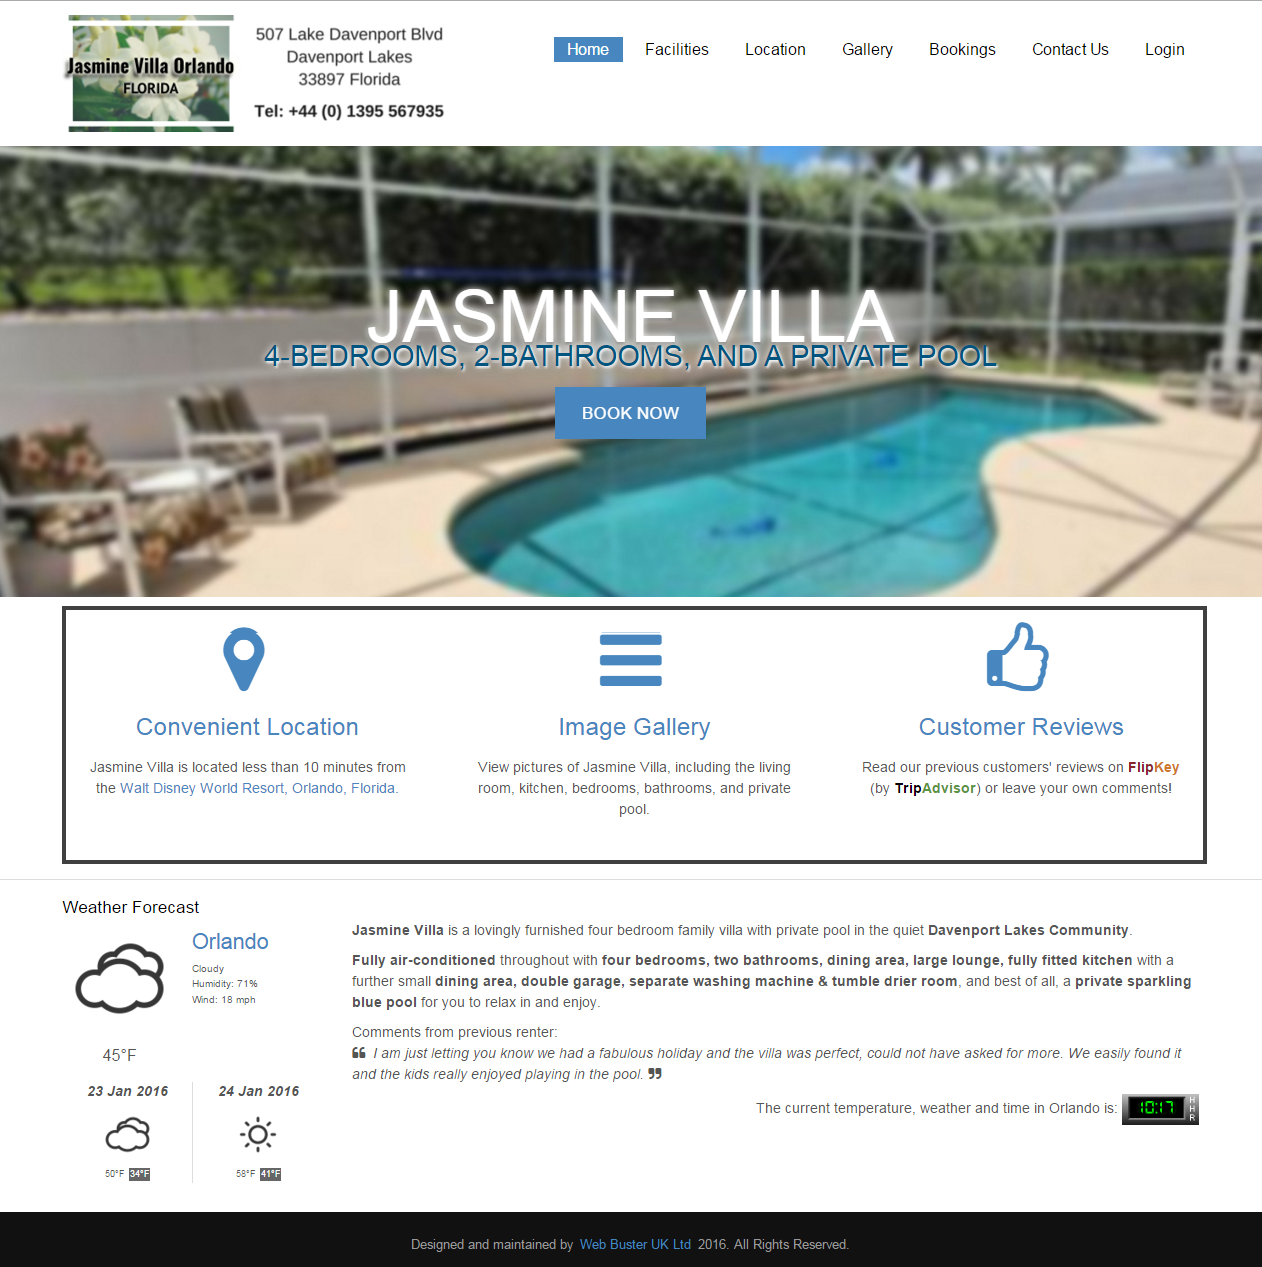 Jasmine Villa Florida